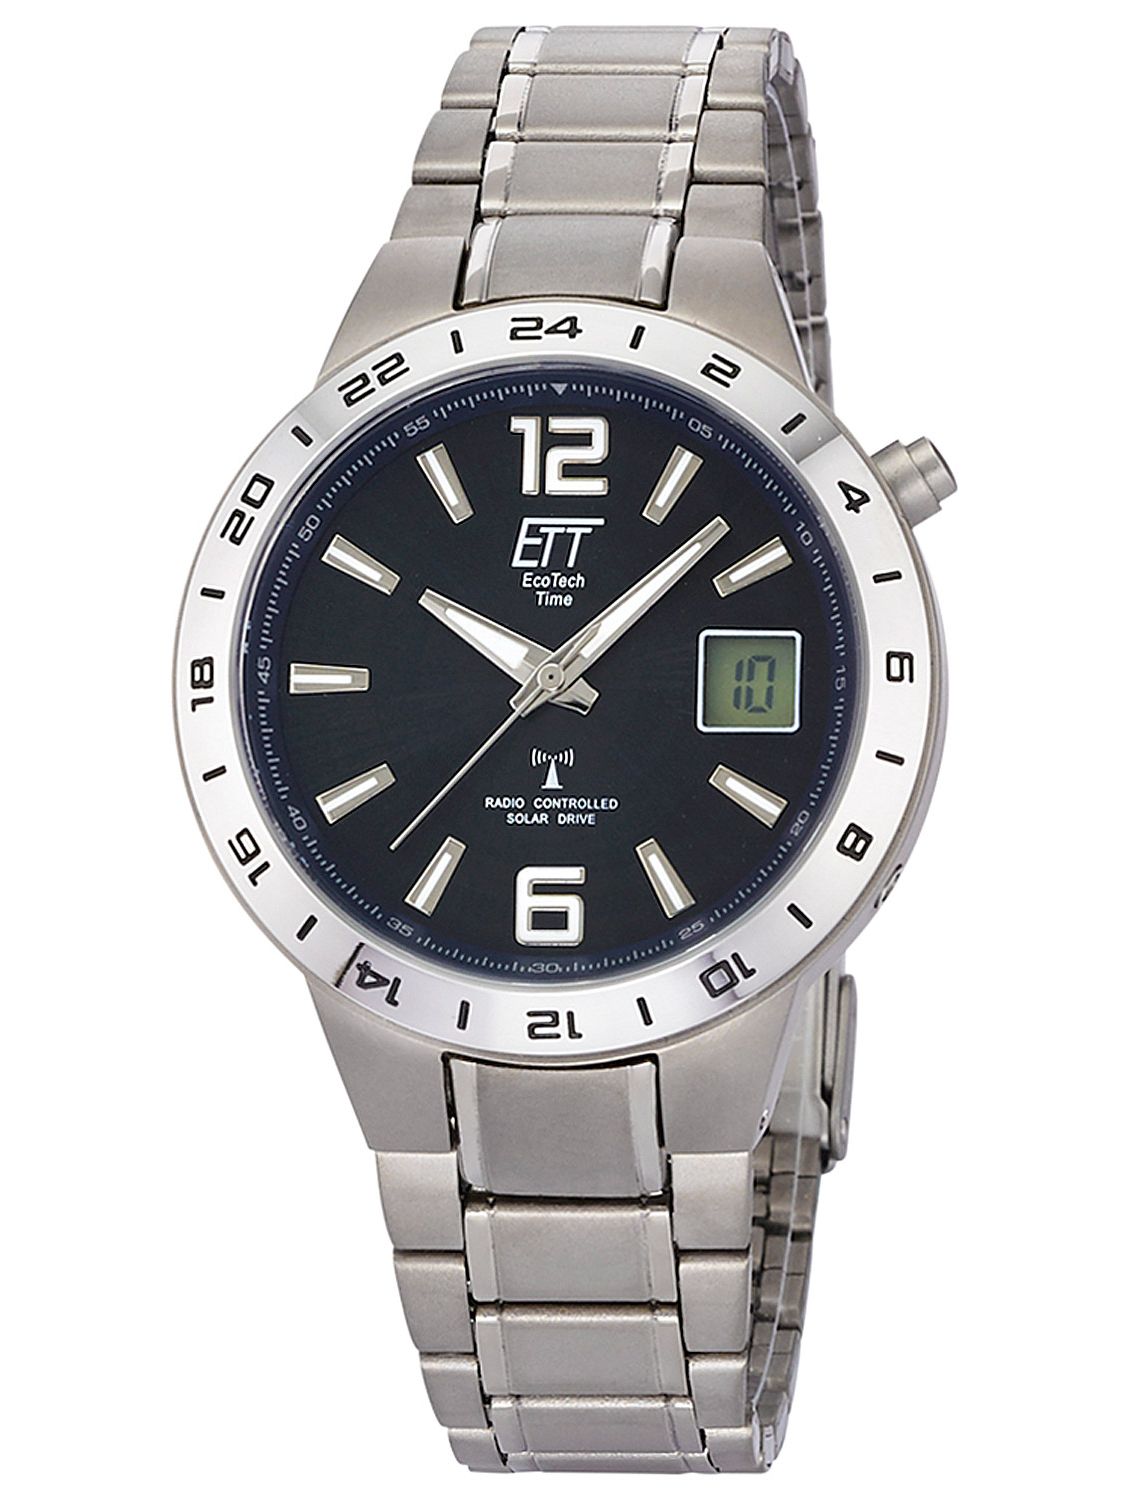 uhrcenter Time EGT-11411-41M Eco Tech ETT Titanium Solar • Watch Radio-Controlled